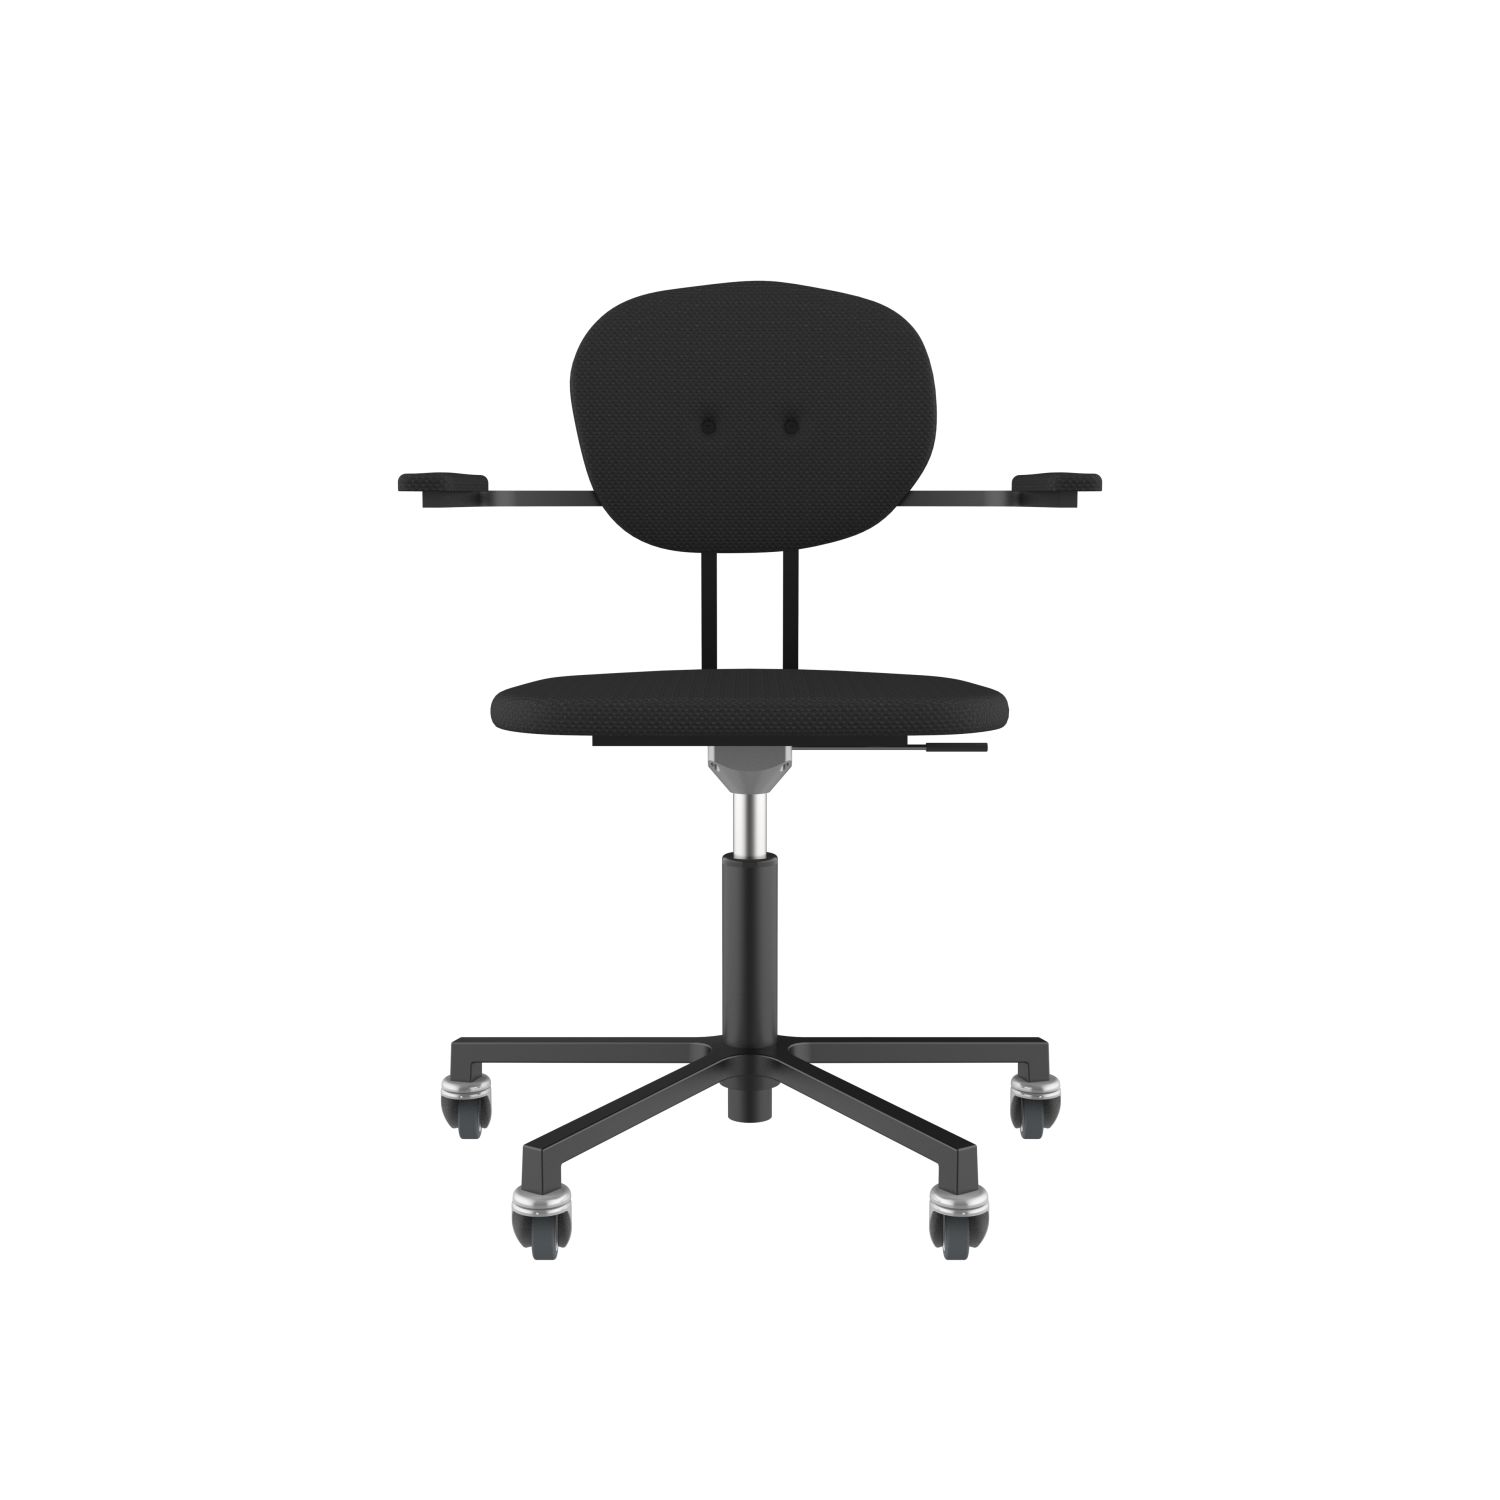 lensvelt maarten baas office chair with armrests backrest a havana black 090 black ral9005 soft wheels